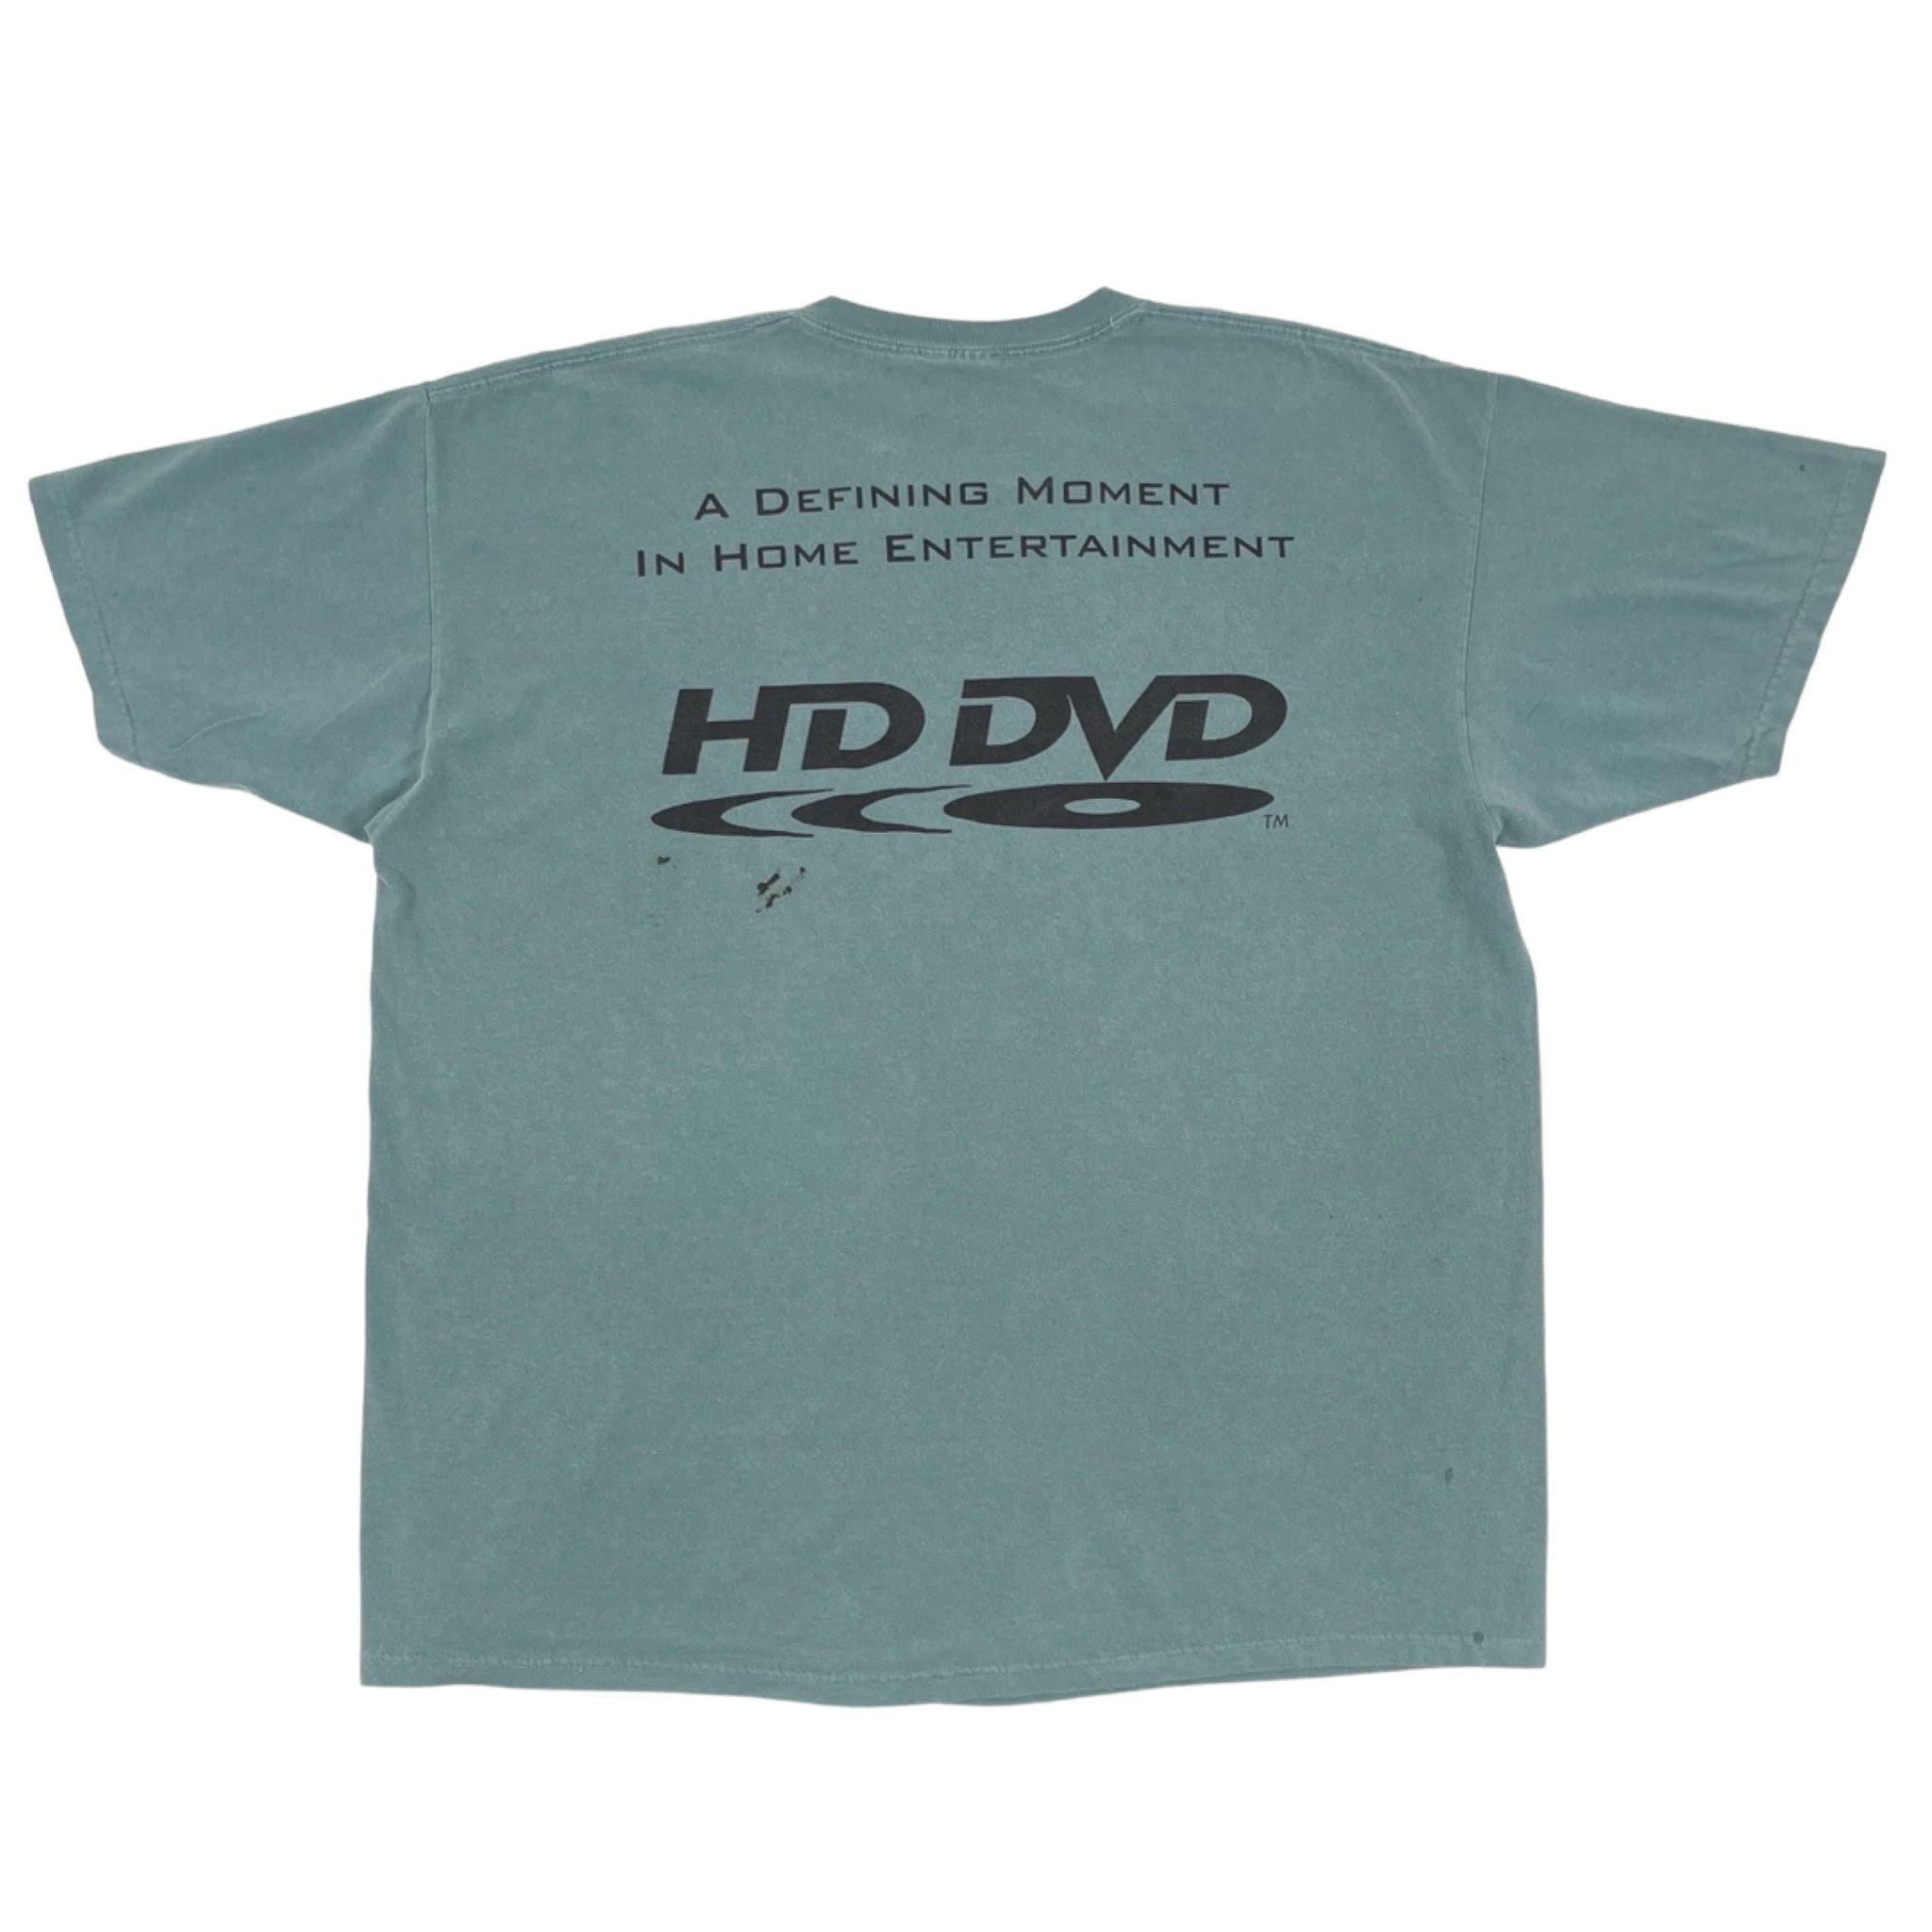 90s vintage TOSHIBA DVD プロモーションTシャツ企業